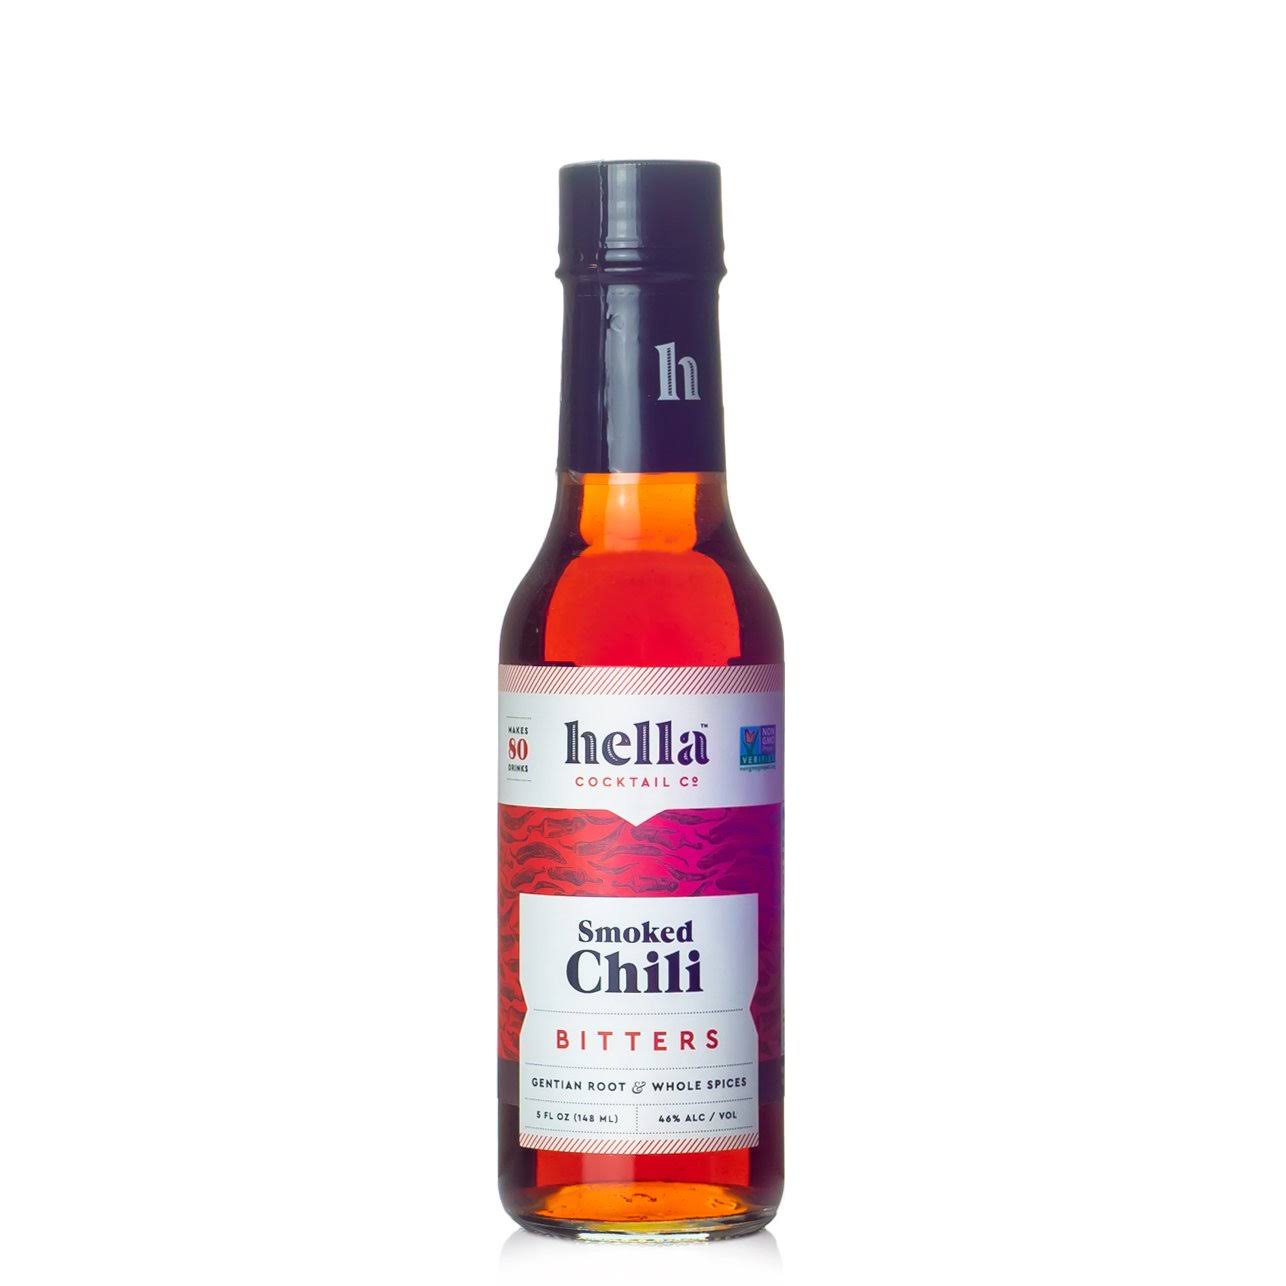 Hella Cocktail Co. Bitters, Smoked Chili - 5 fl oz